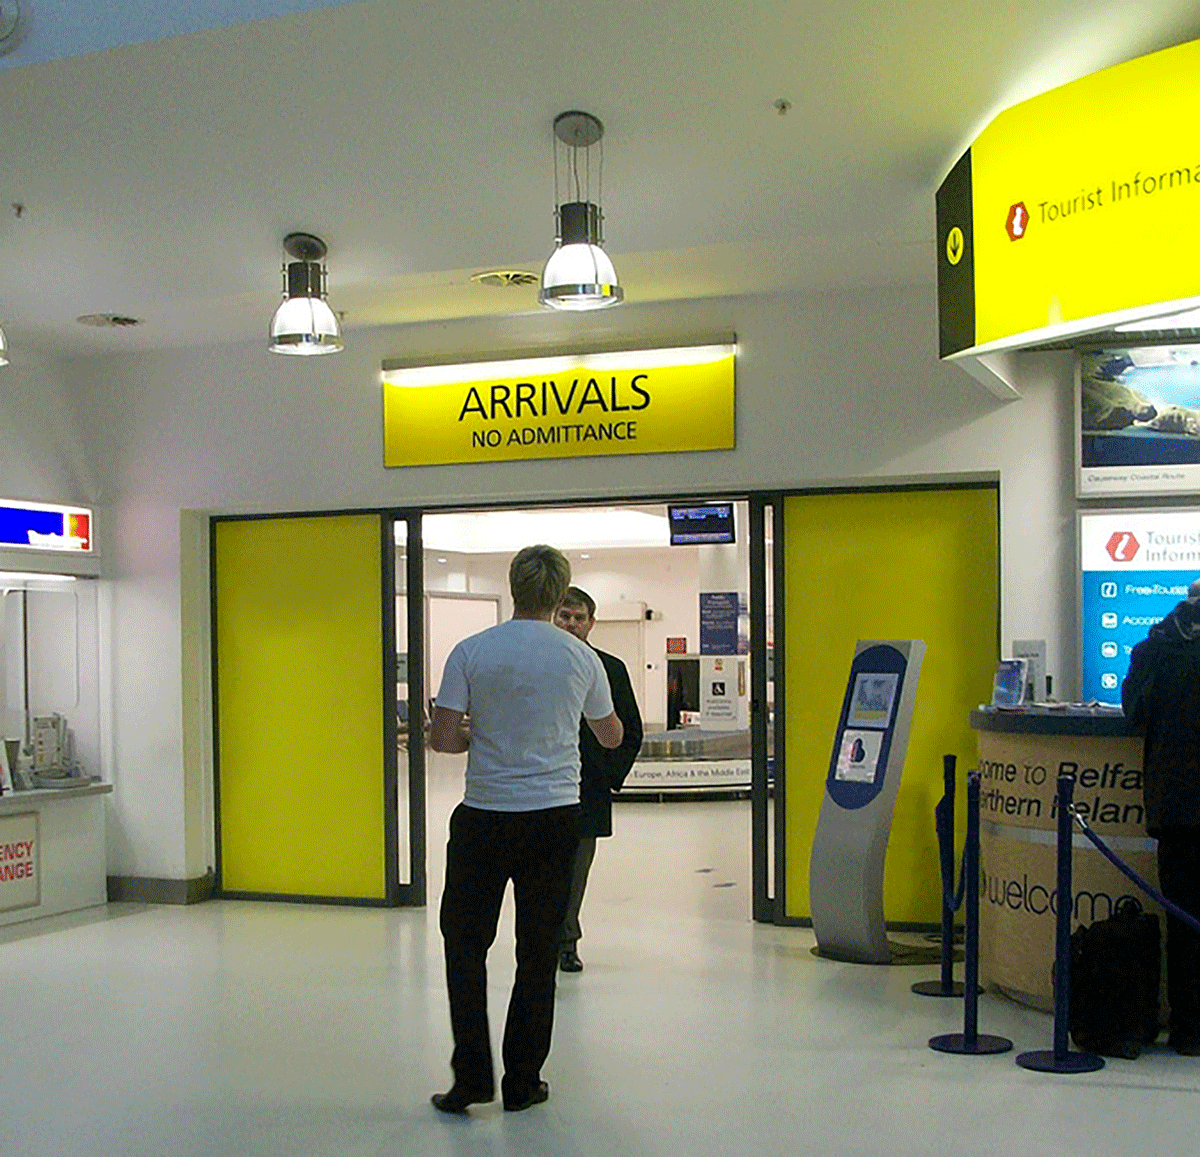 Belfast City Airport arrivals sign